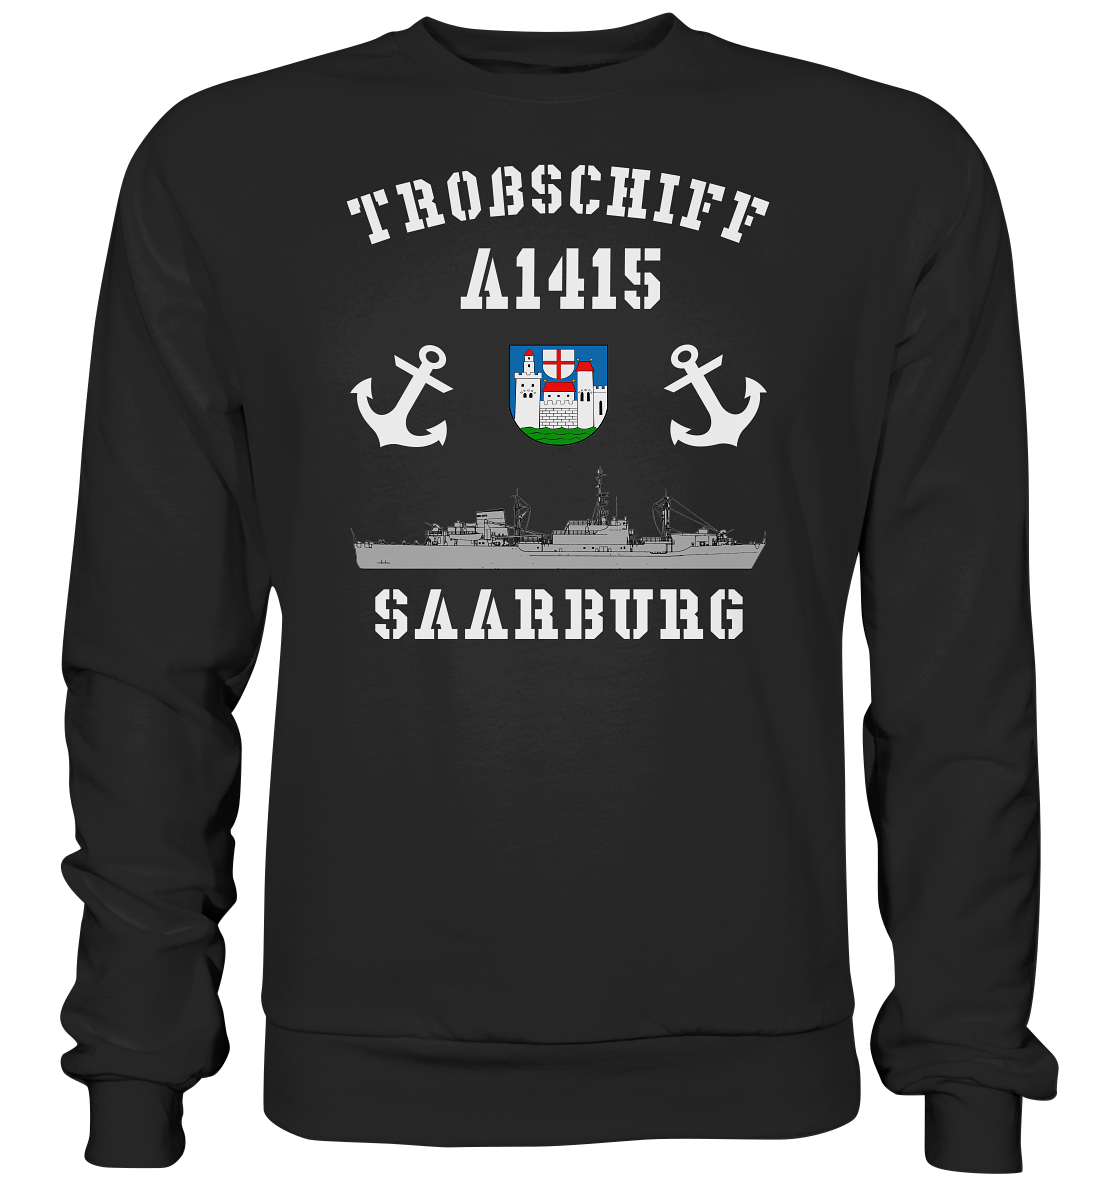 Troßschiff A1415 SAARBURG - Premium Sweatshirt